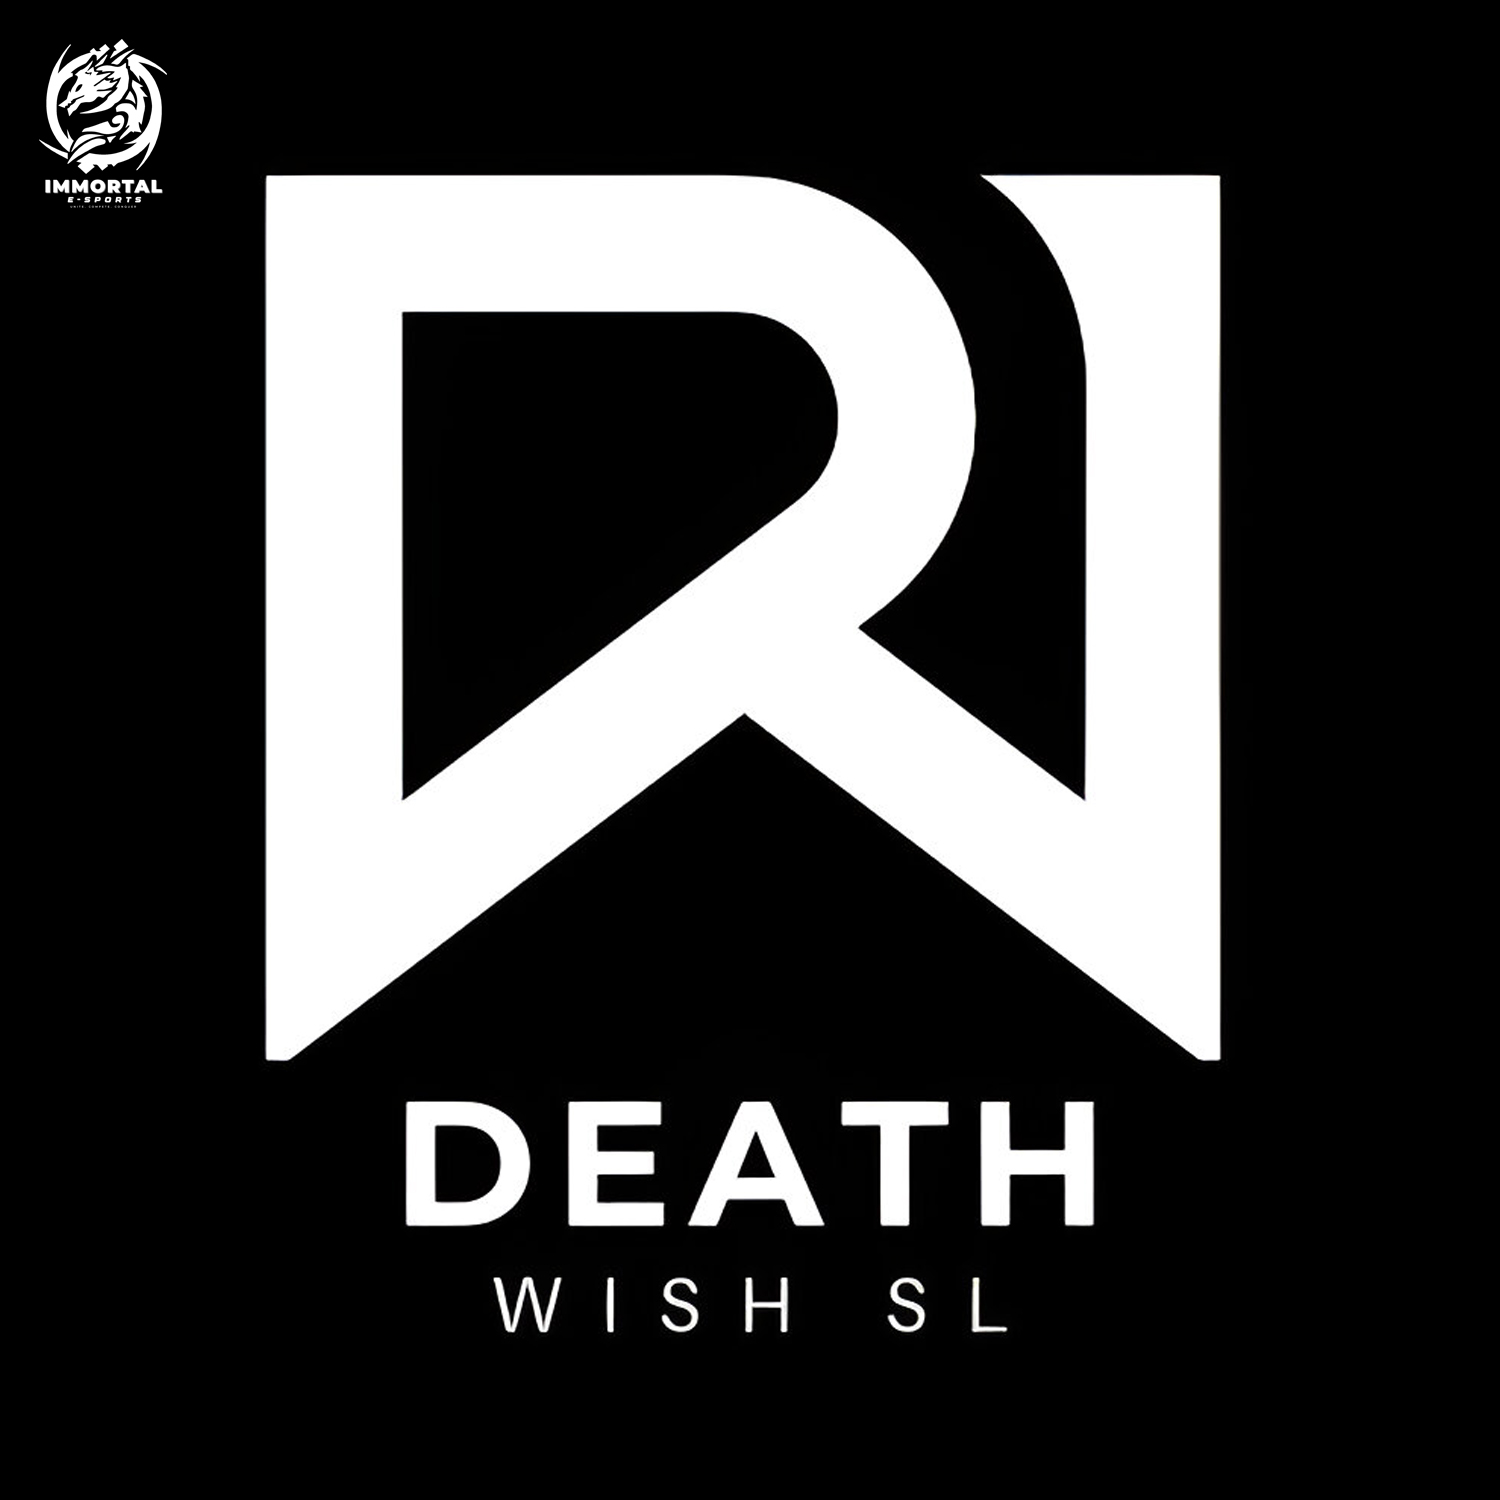 DEATH WISH SL